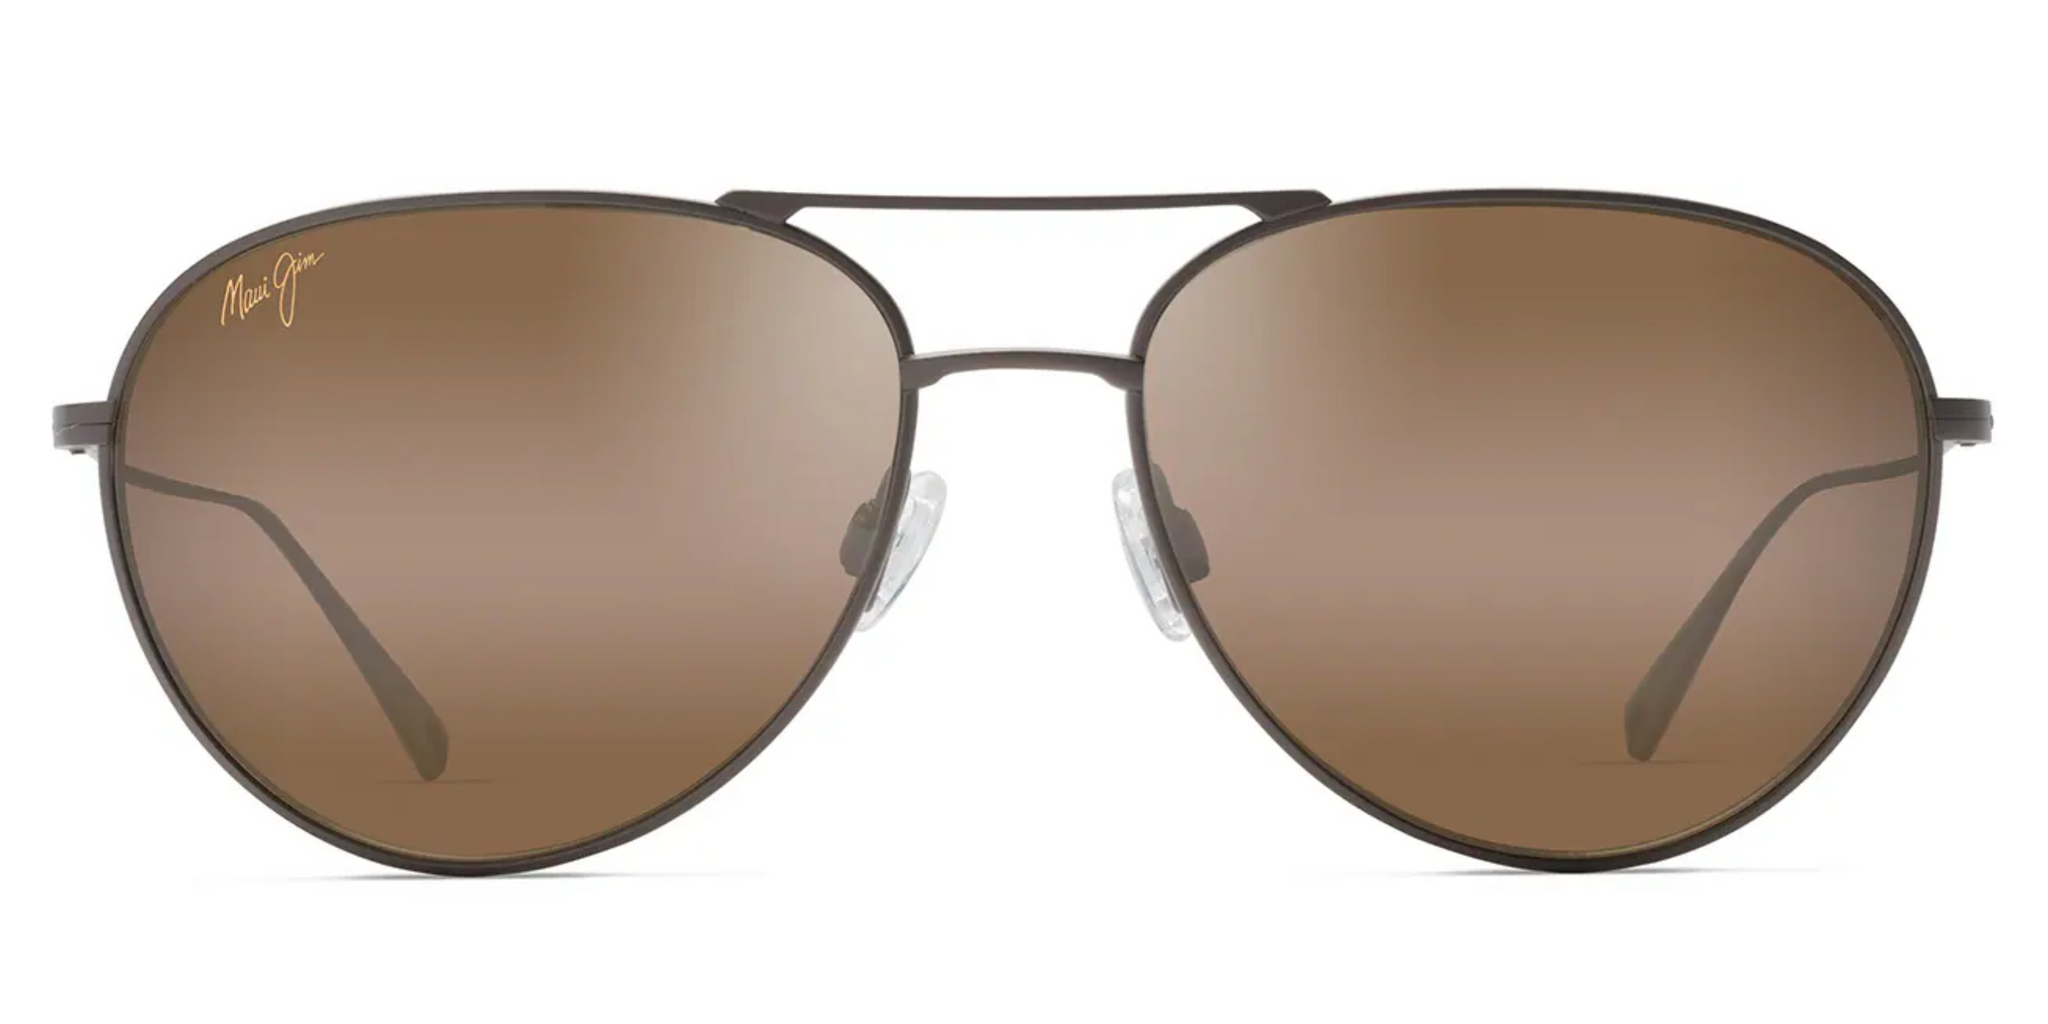 Maui Jim Walk 885 Sunglasses: 885-17, B885-03, H885-01, RM885-02